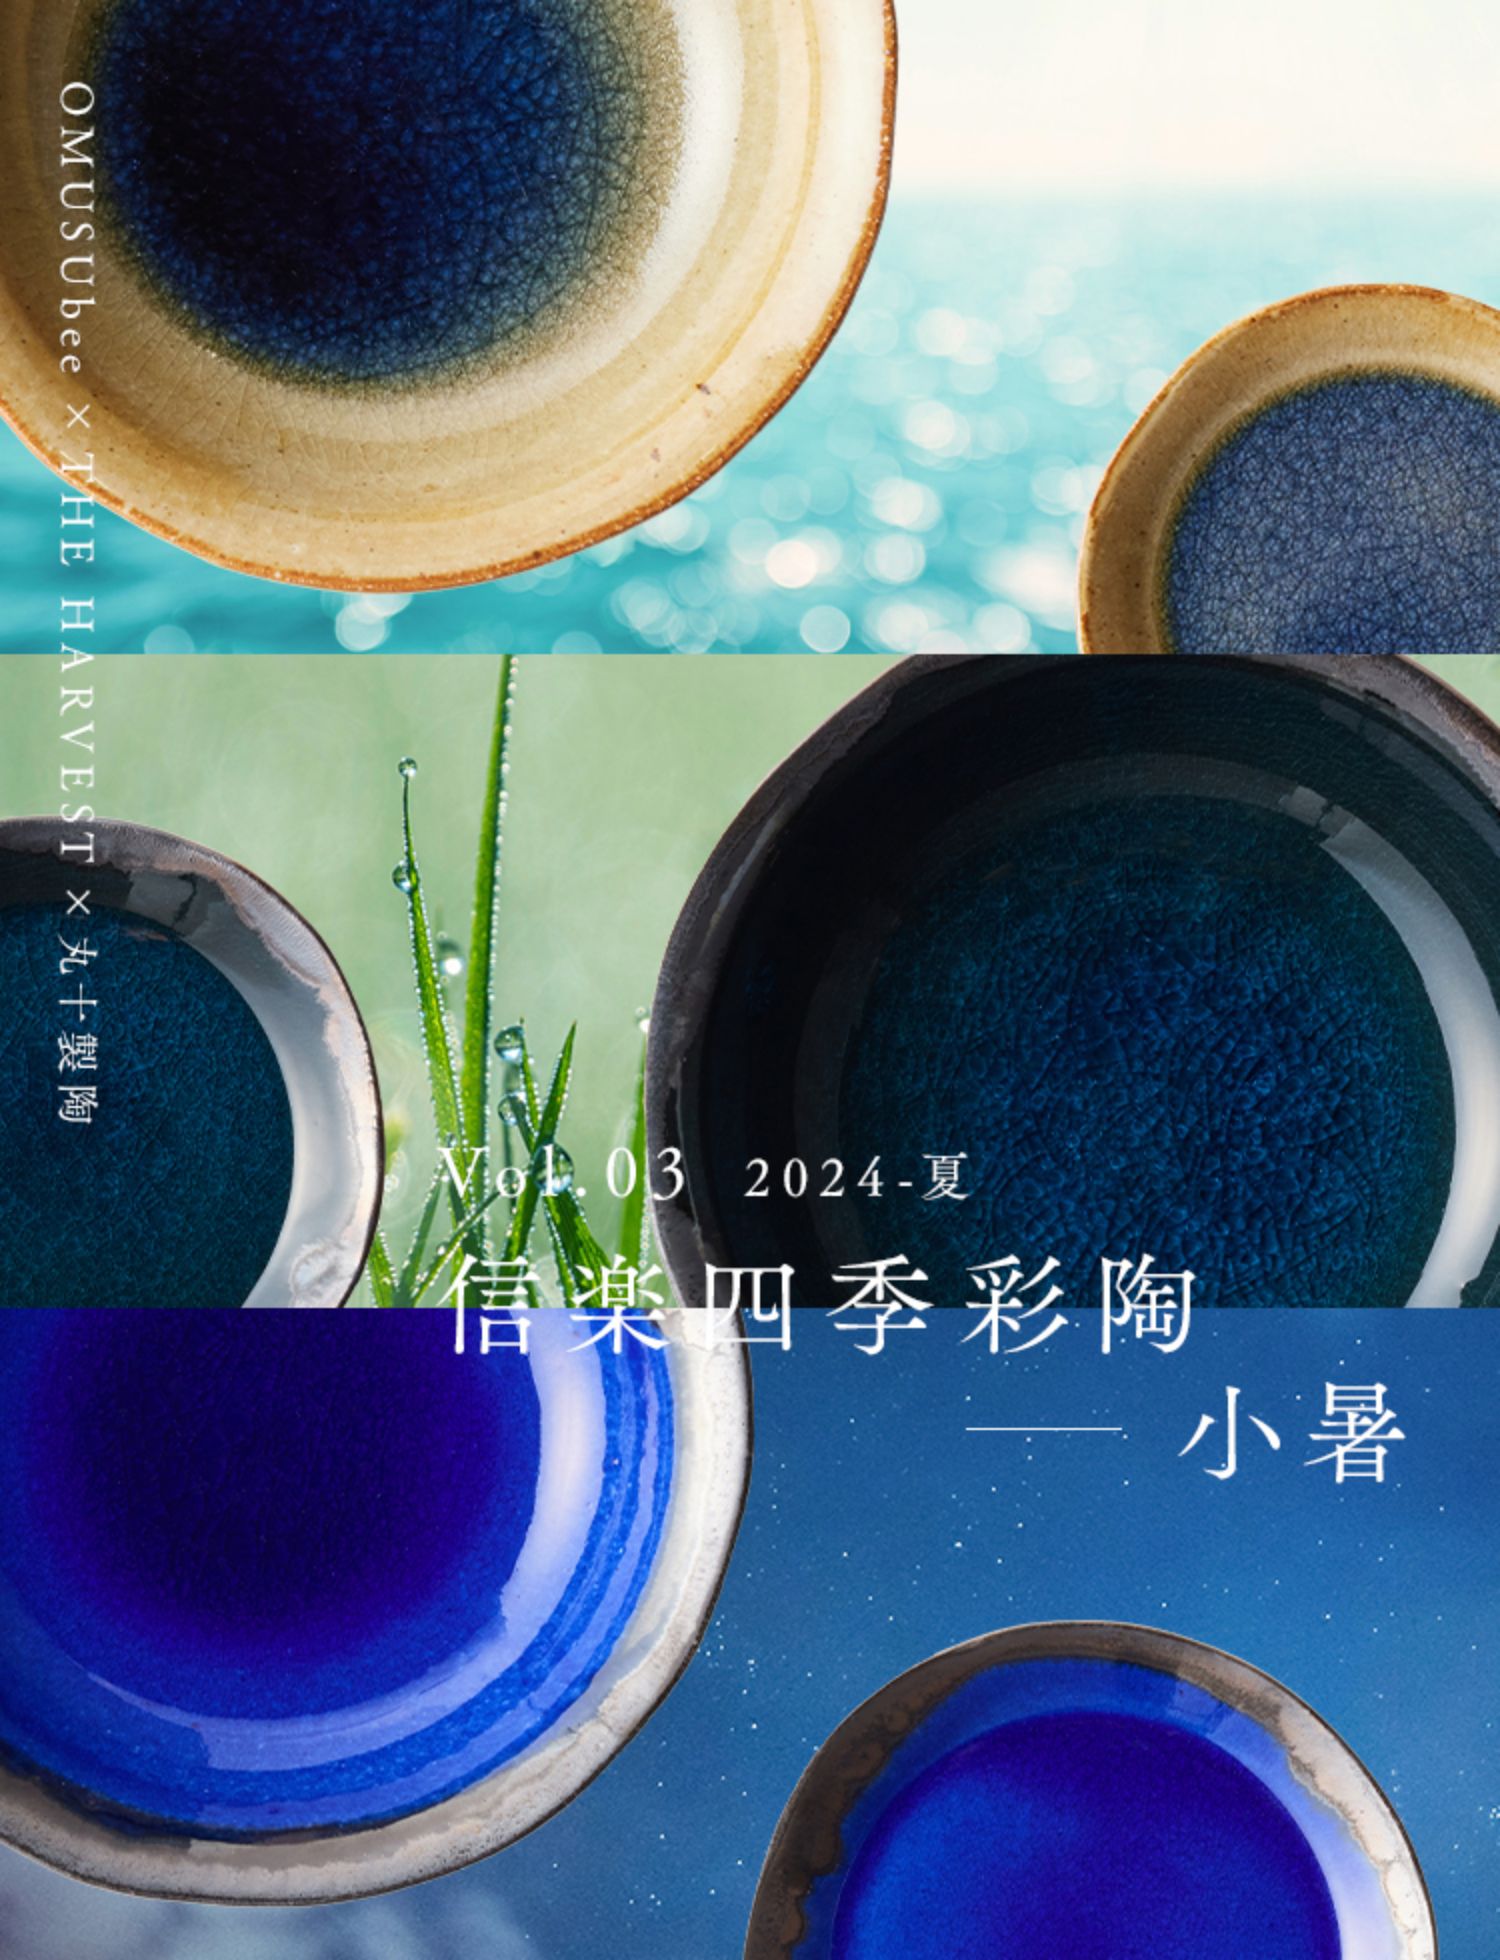 Vol.03 2024-夏 信楽四季彩陶ー小暑